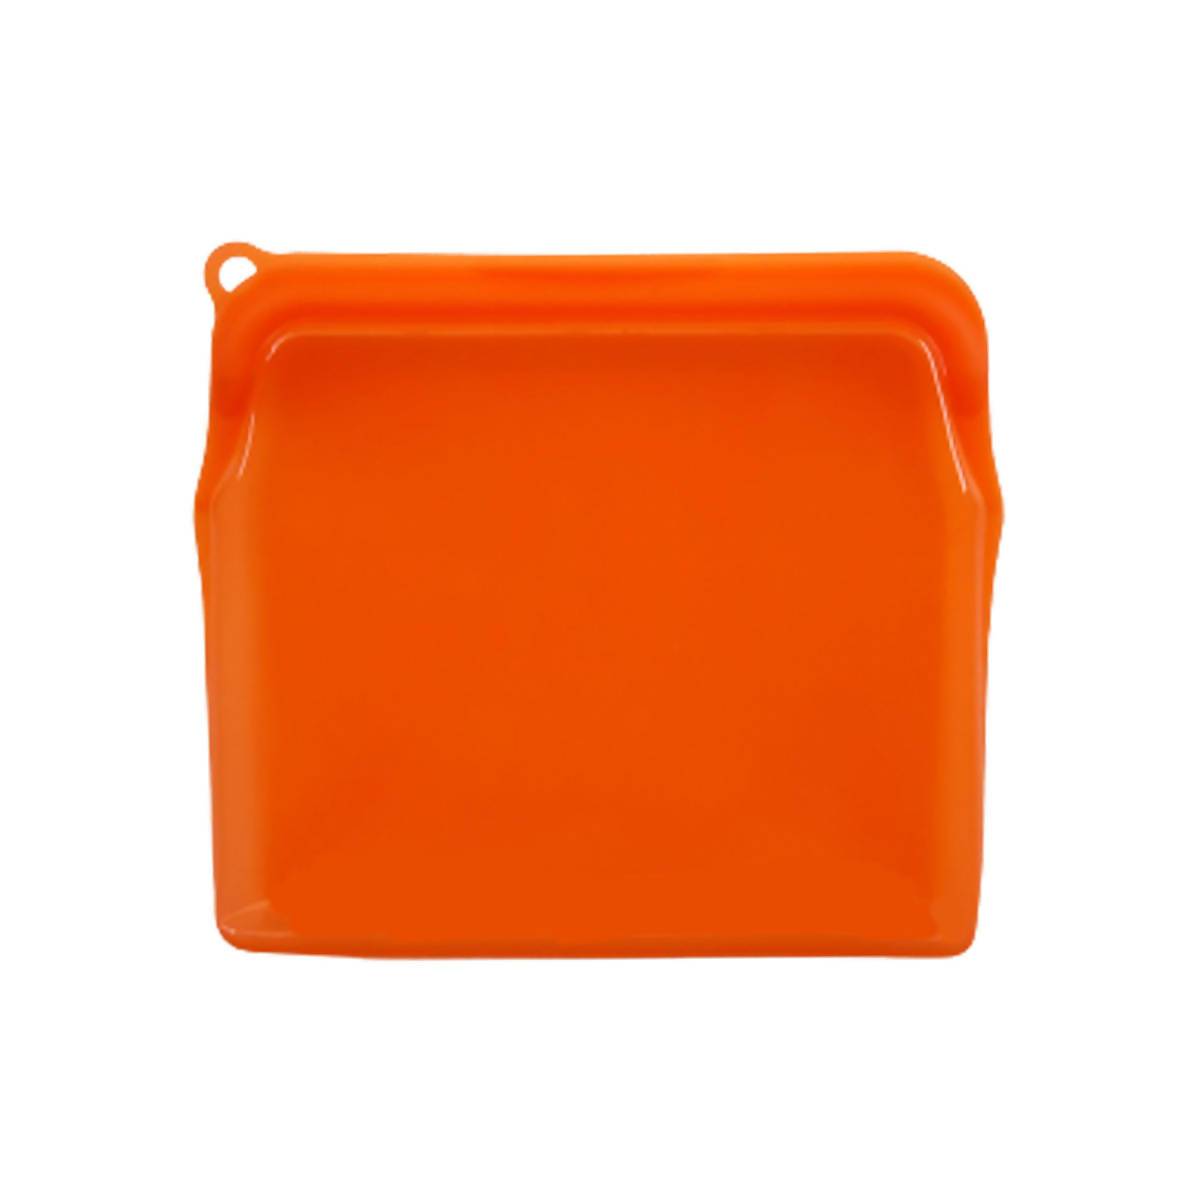 Kasu Reusable Silicone Food Bag - Large Snack Bags Neis Haus Orange 